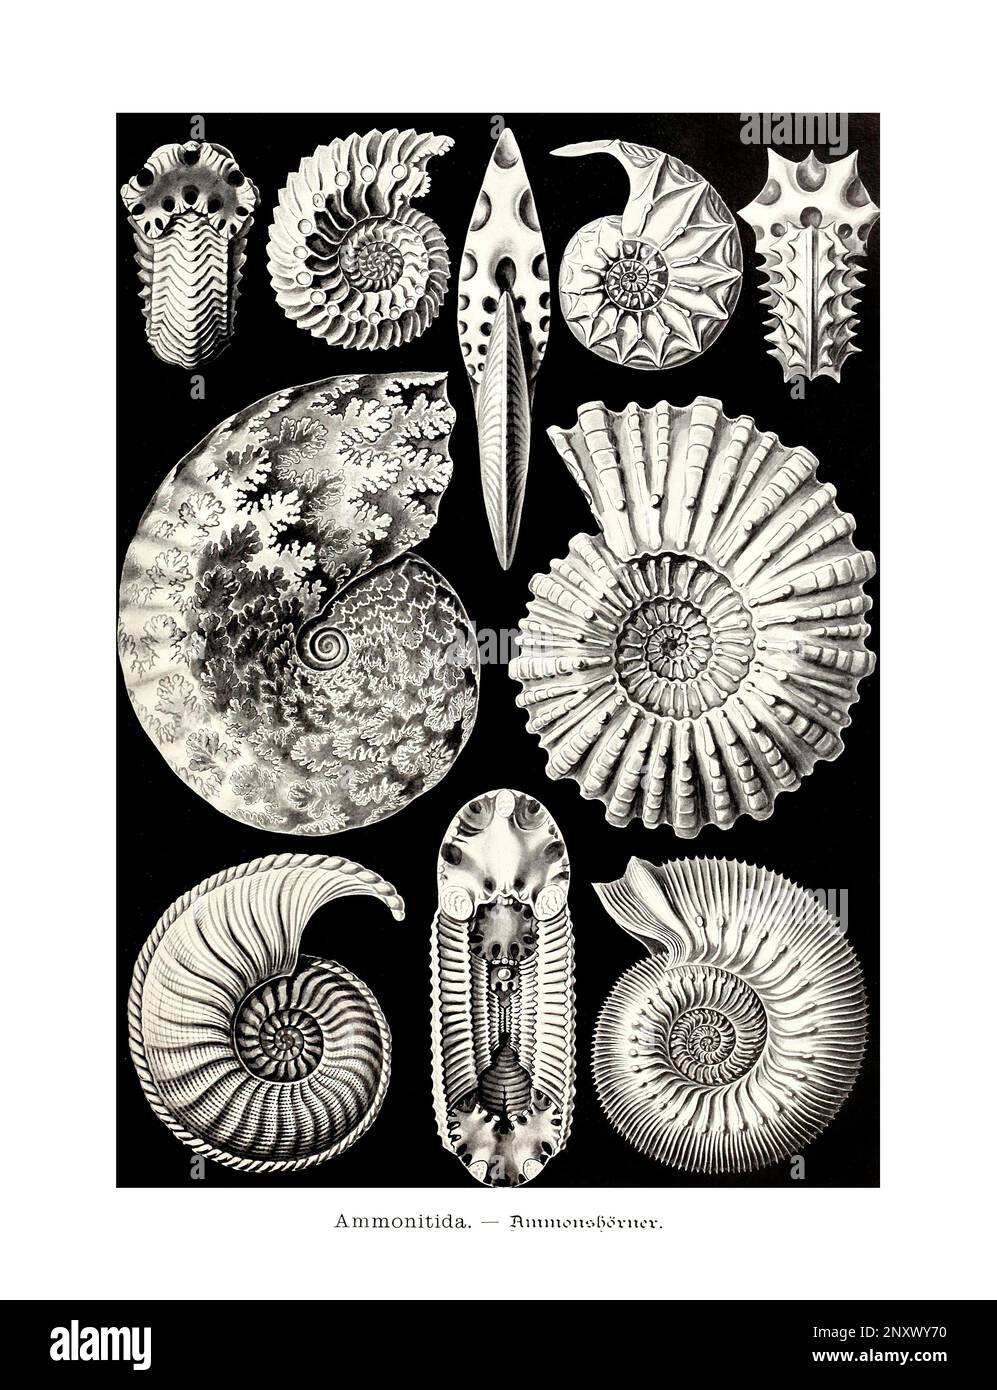 ERNST HAECKEL ART - ammonitida - 19th Century - Antique Zoological illustration - illustrations du livre : “Art Forms in nature” Banque D'Images